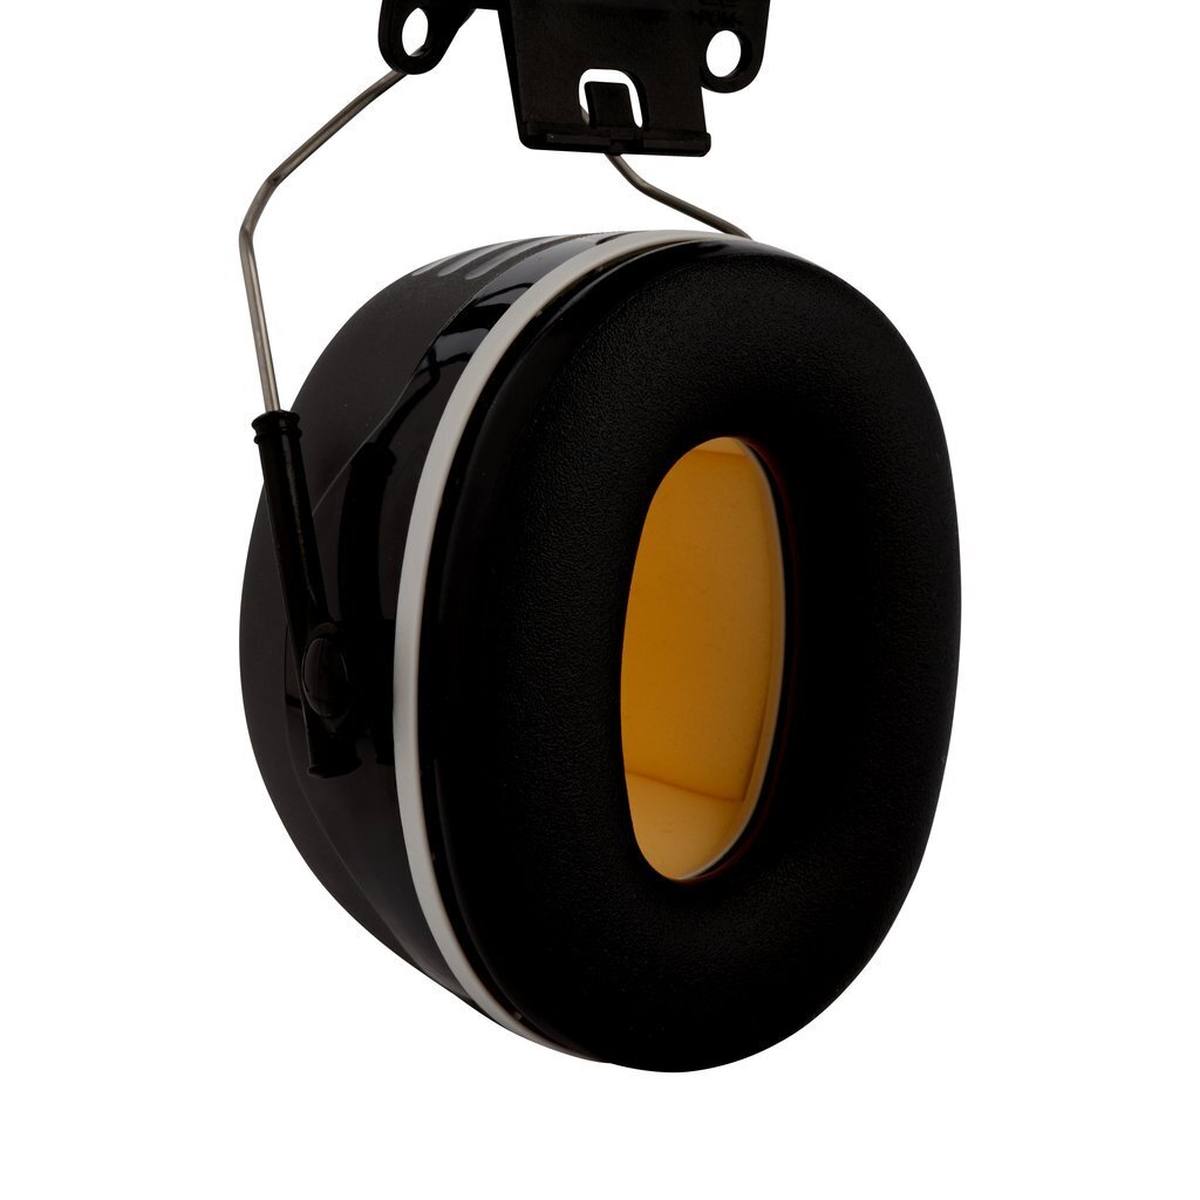 3M PELTOR Earmuffs, X5P3E helmet attachment, black, SNR=36 dB with helmet adapter P3E (for all 3M helmets, except G2000)